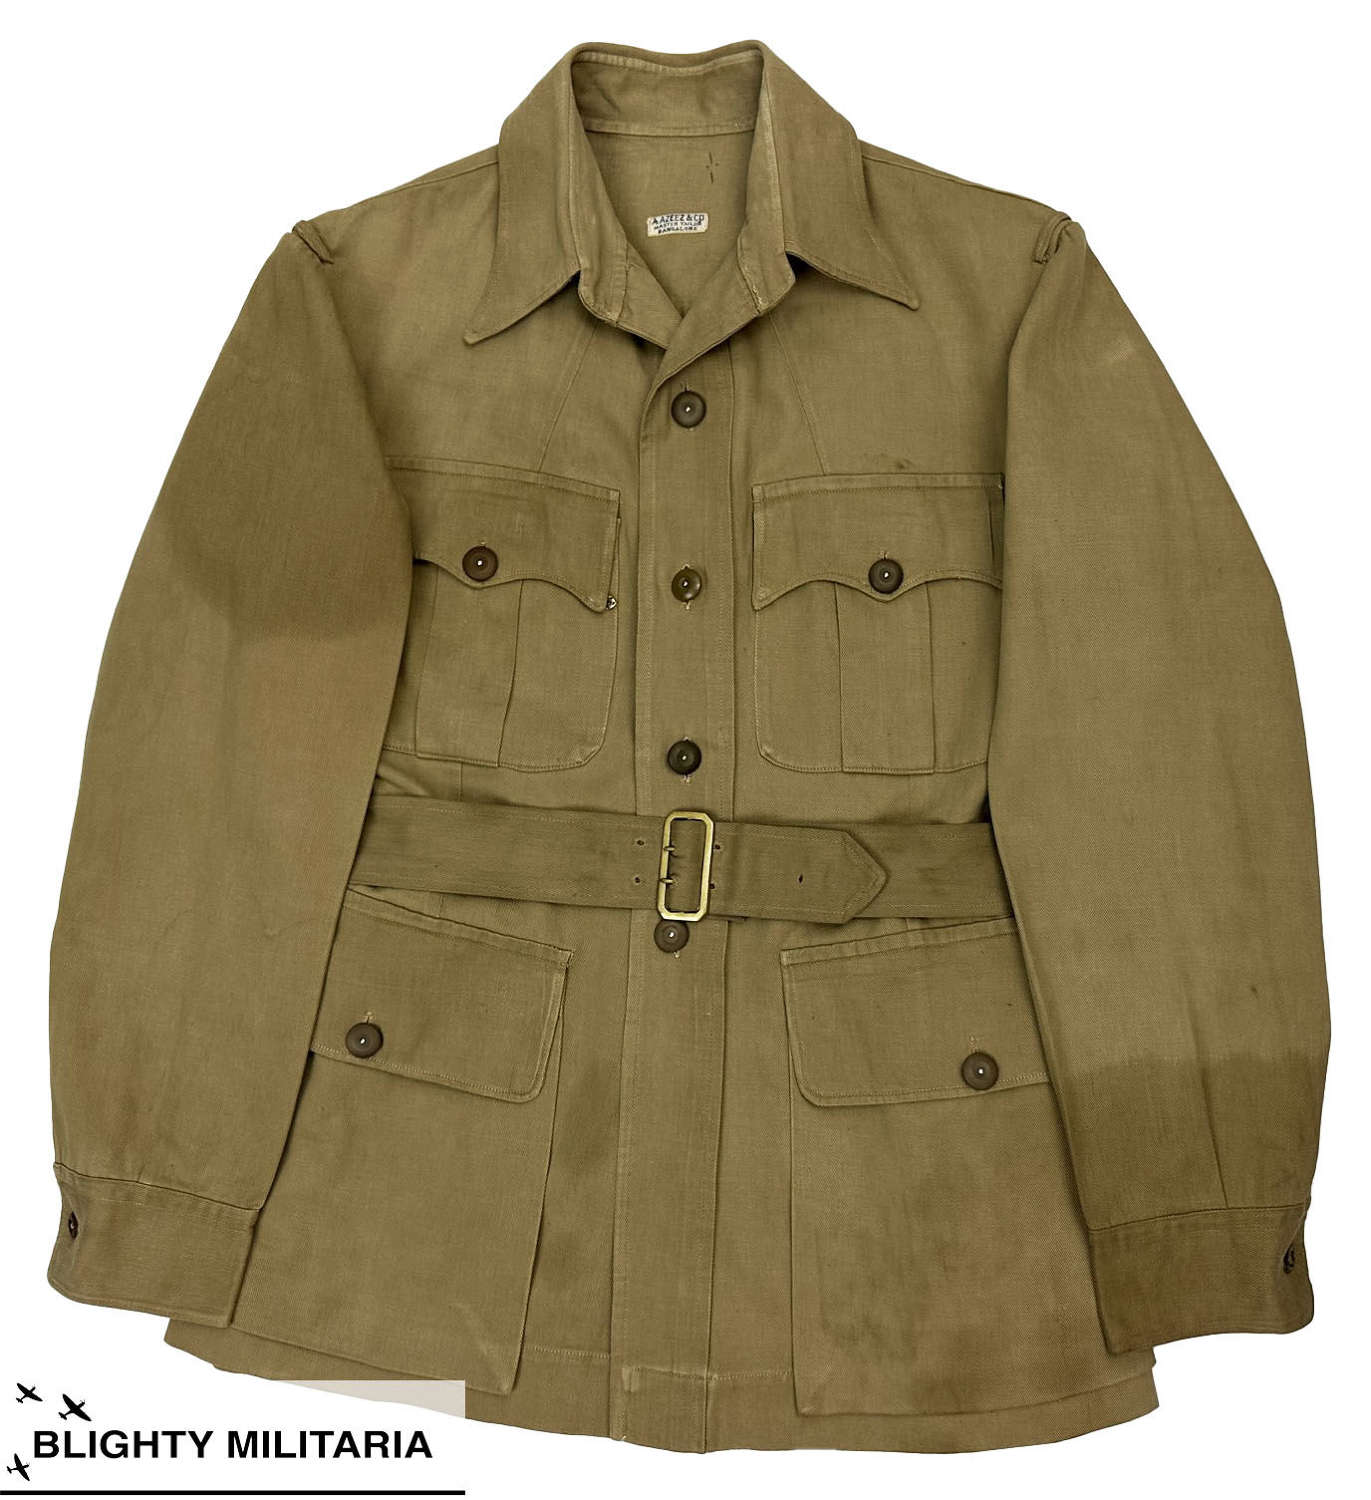 Original 1940s RAF / British Army Officer's KD Bush Jacket - Size 36